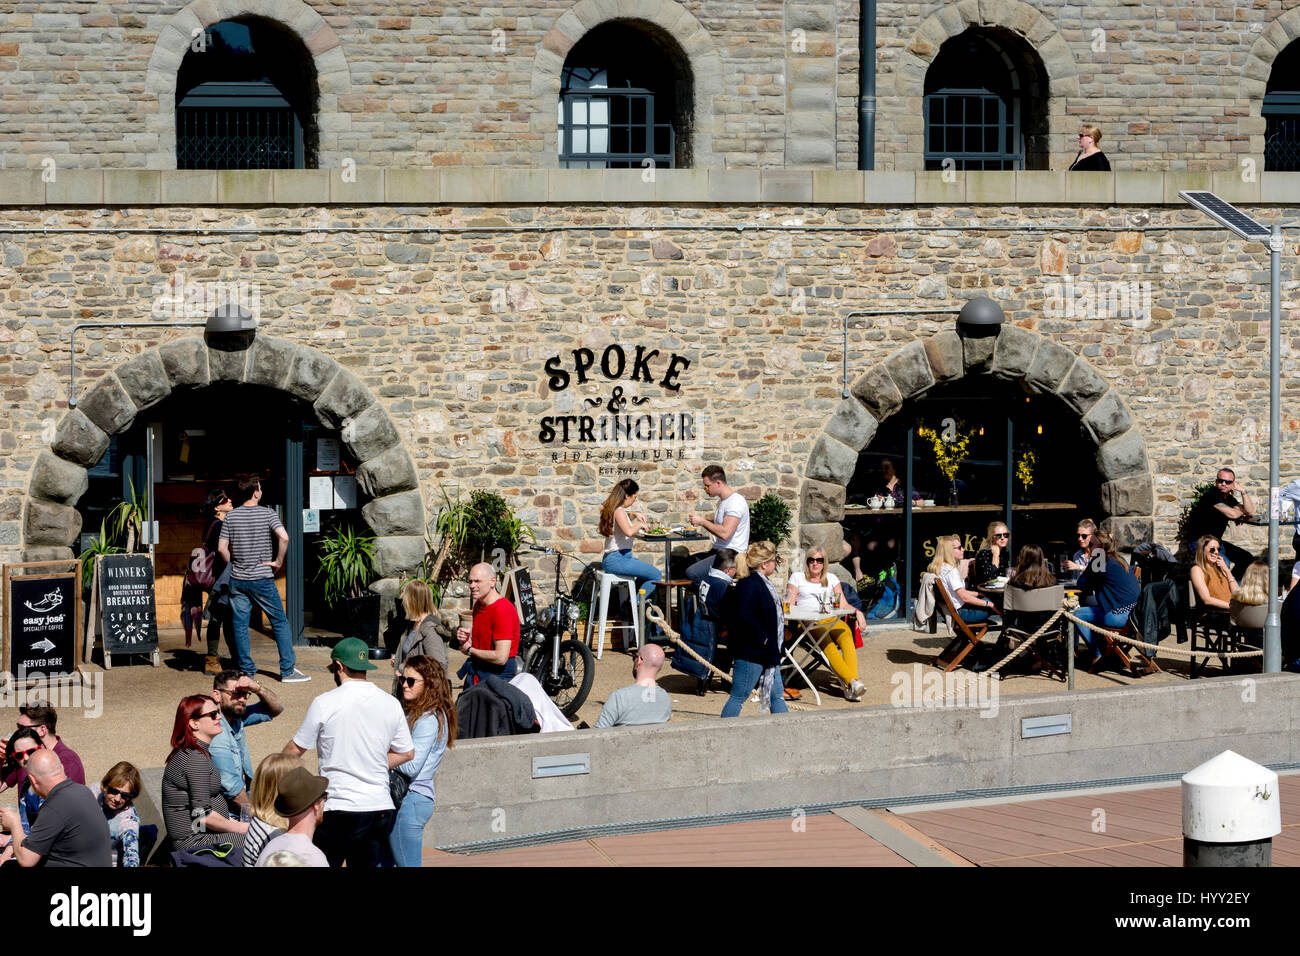 Spoke and Stringer cafe bar, Bristol, UK Stock Photo